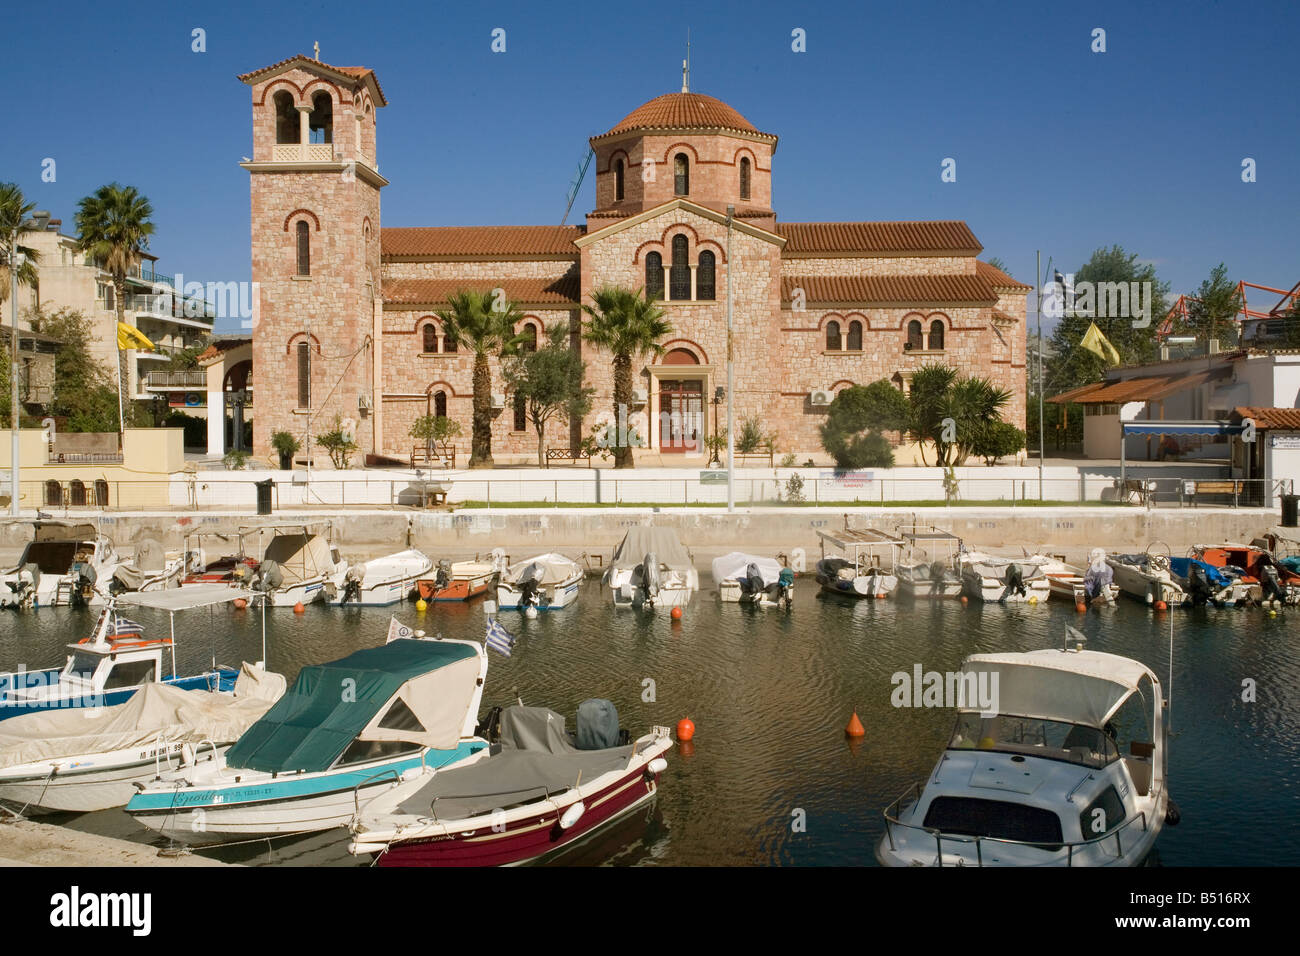 Greece Piraeus church & canal by Dolphinarium Stock Photo